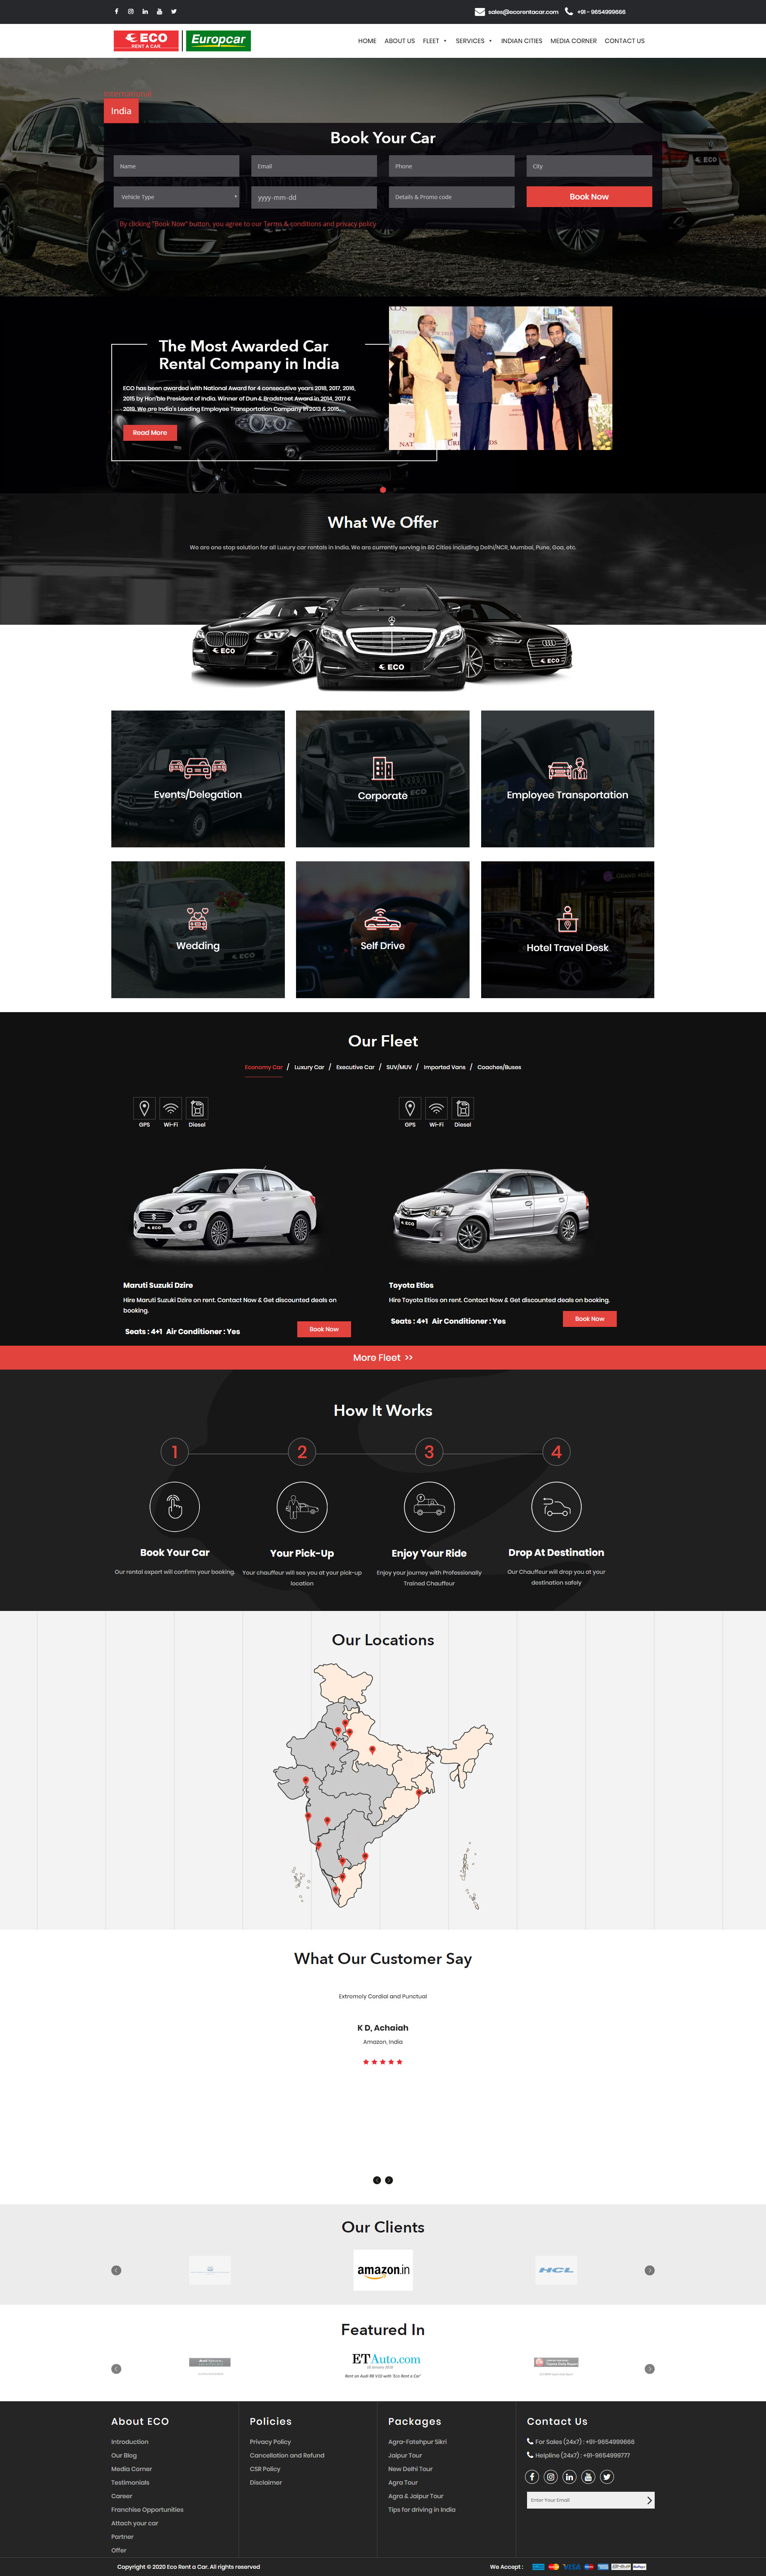 Previous Car Rental Website Design Sample